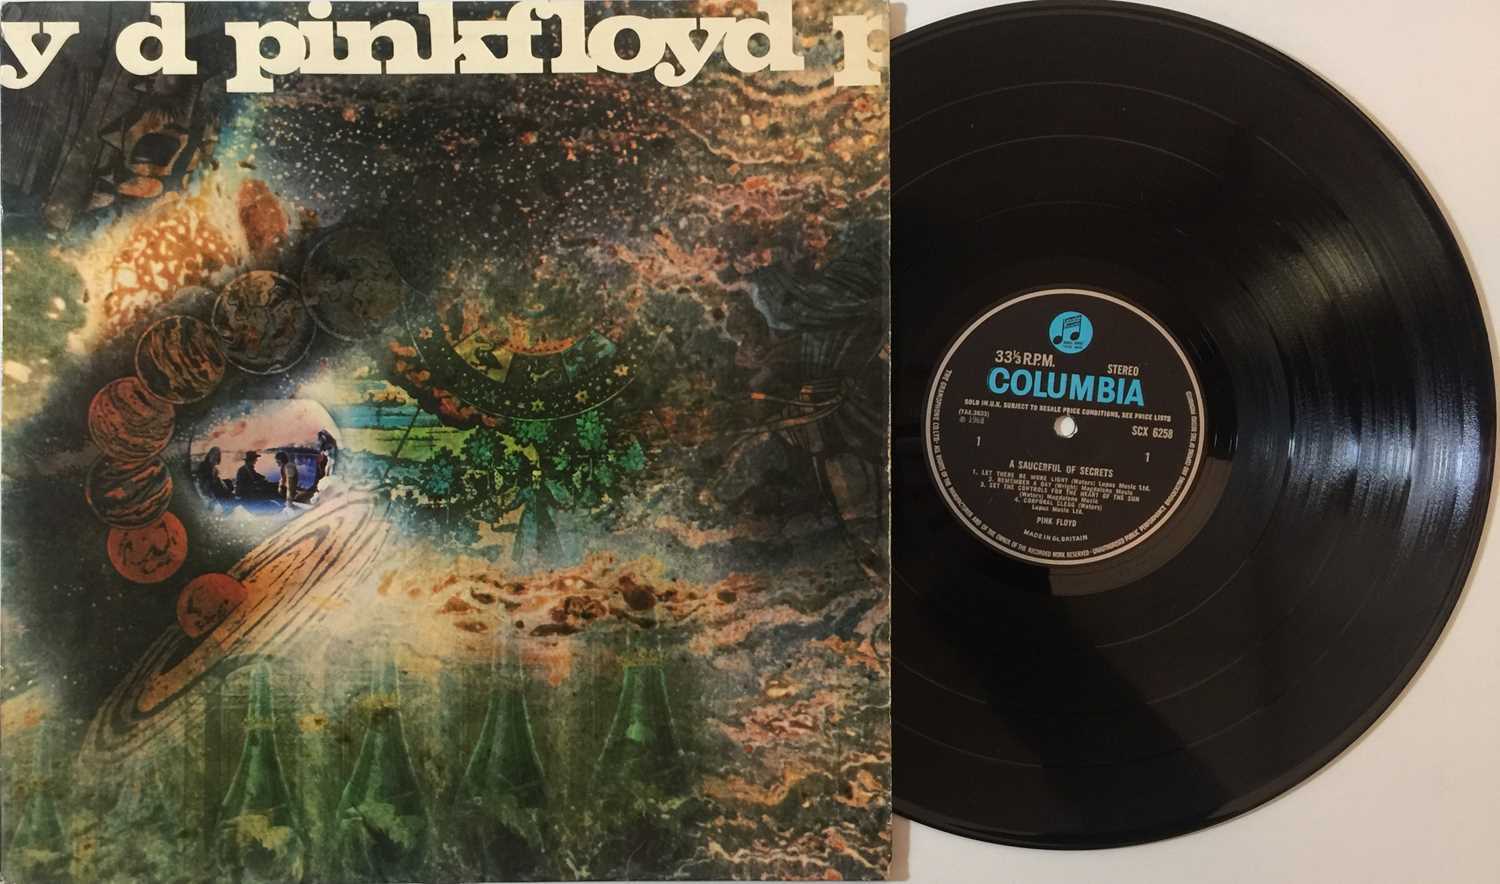 Lot 14 - PINK FLOYD - A SAUCERFUL OF SECRETS LP (ORIGINAL UK STEREO PRESSING - COLUMBIA SCX 6258)